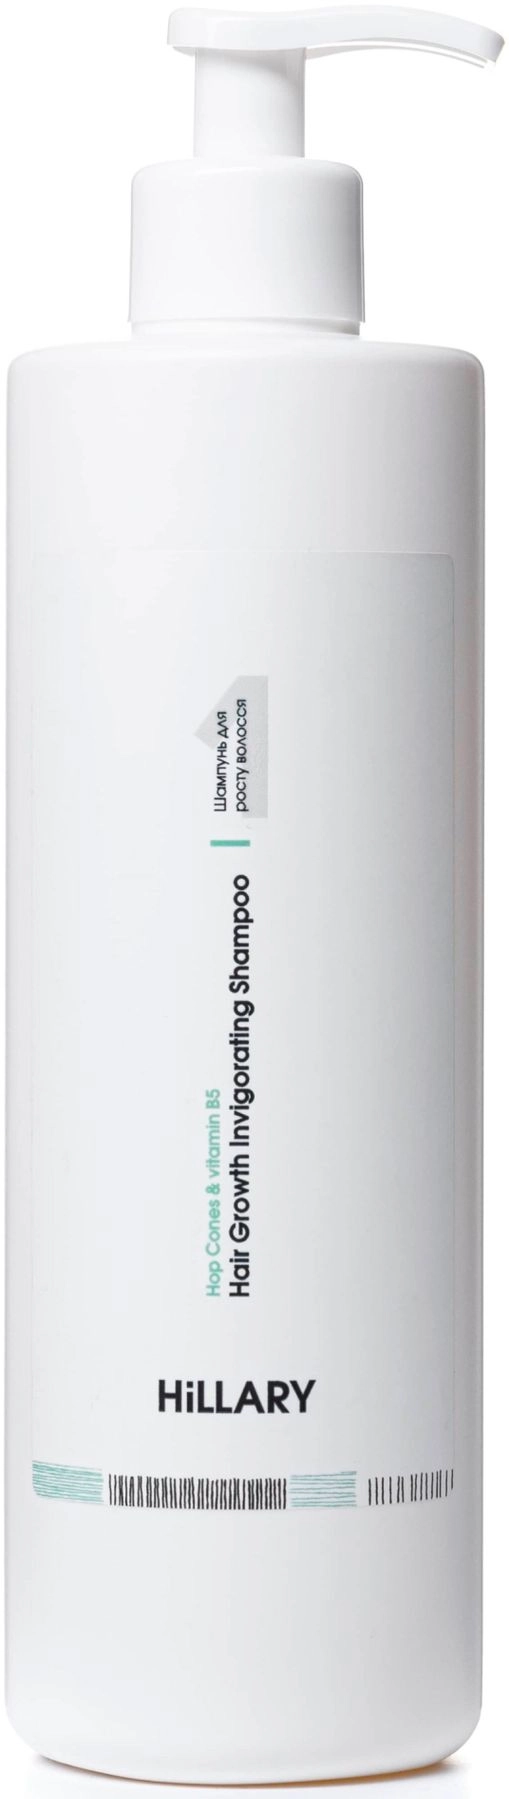 Шампунь против выпадения волос - Hillary Serenoa & РР Hair Loss Control Shampoo, 250 мл - фото N1